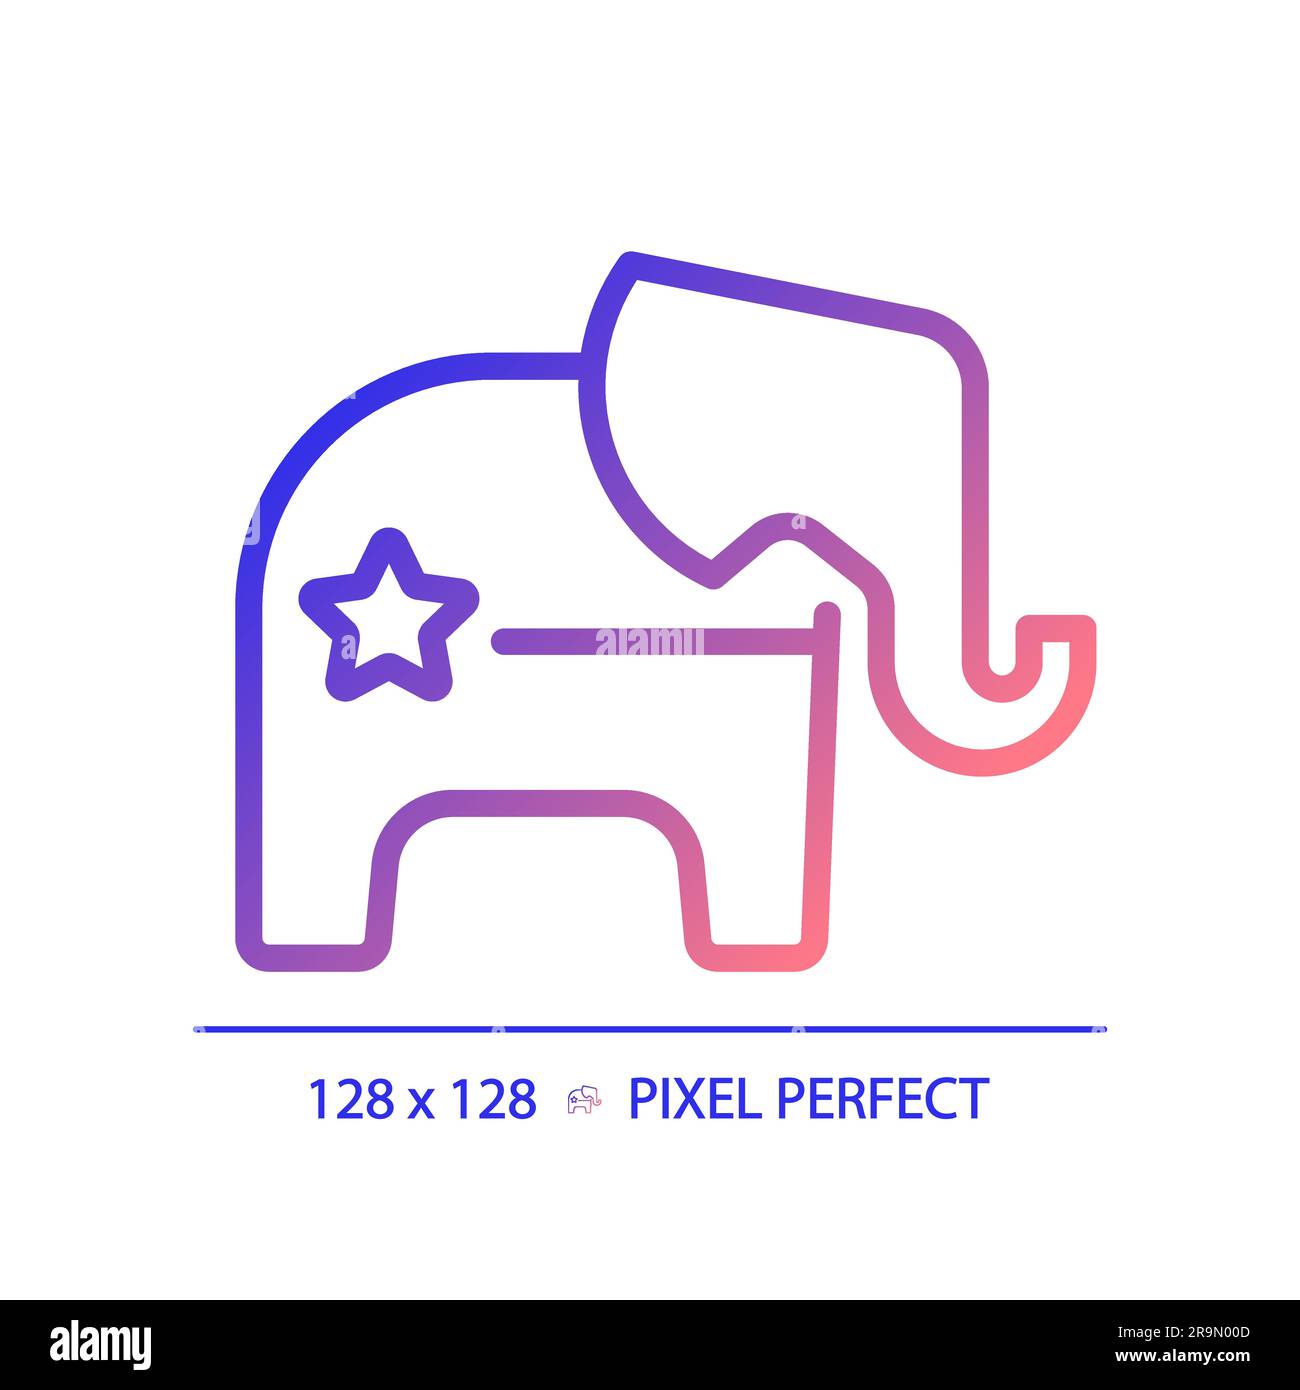 Pixel perfect gradient Republican Party logo Stock Vector